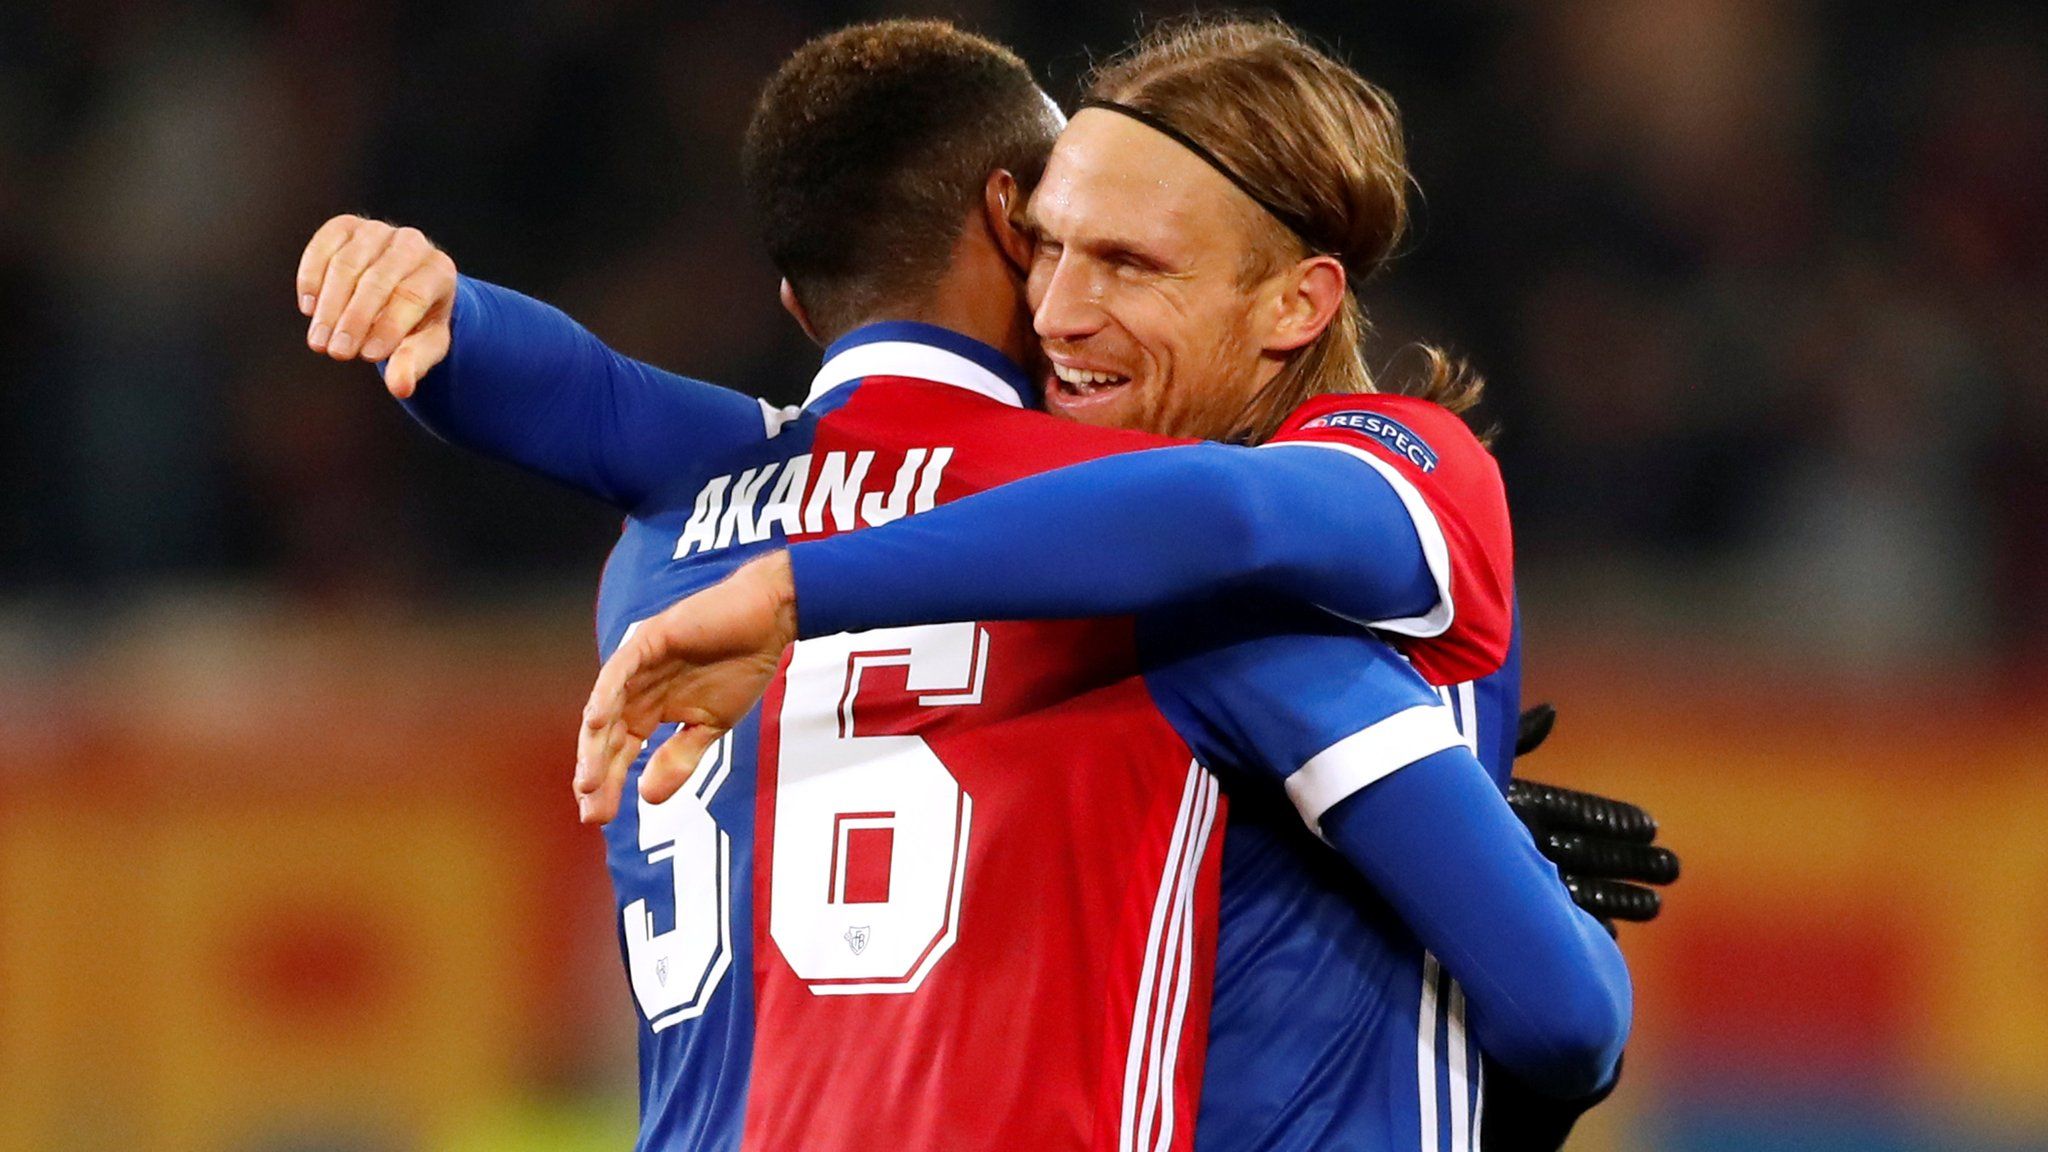 Basel celebrate